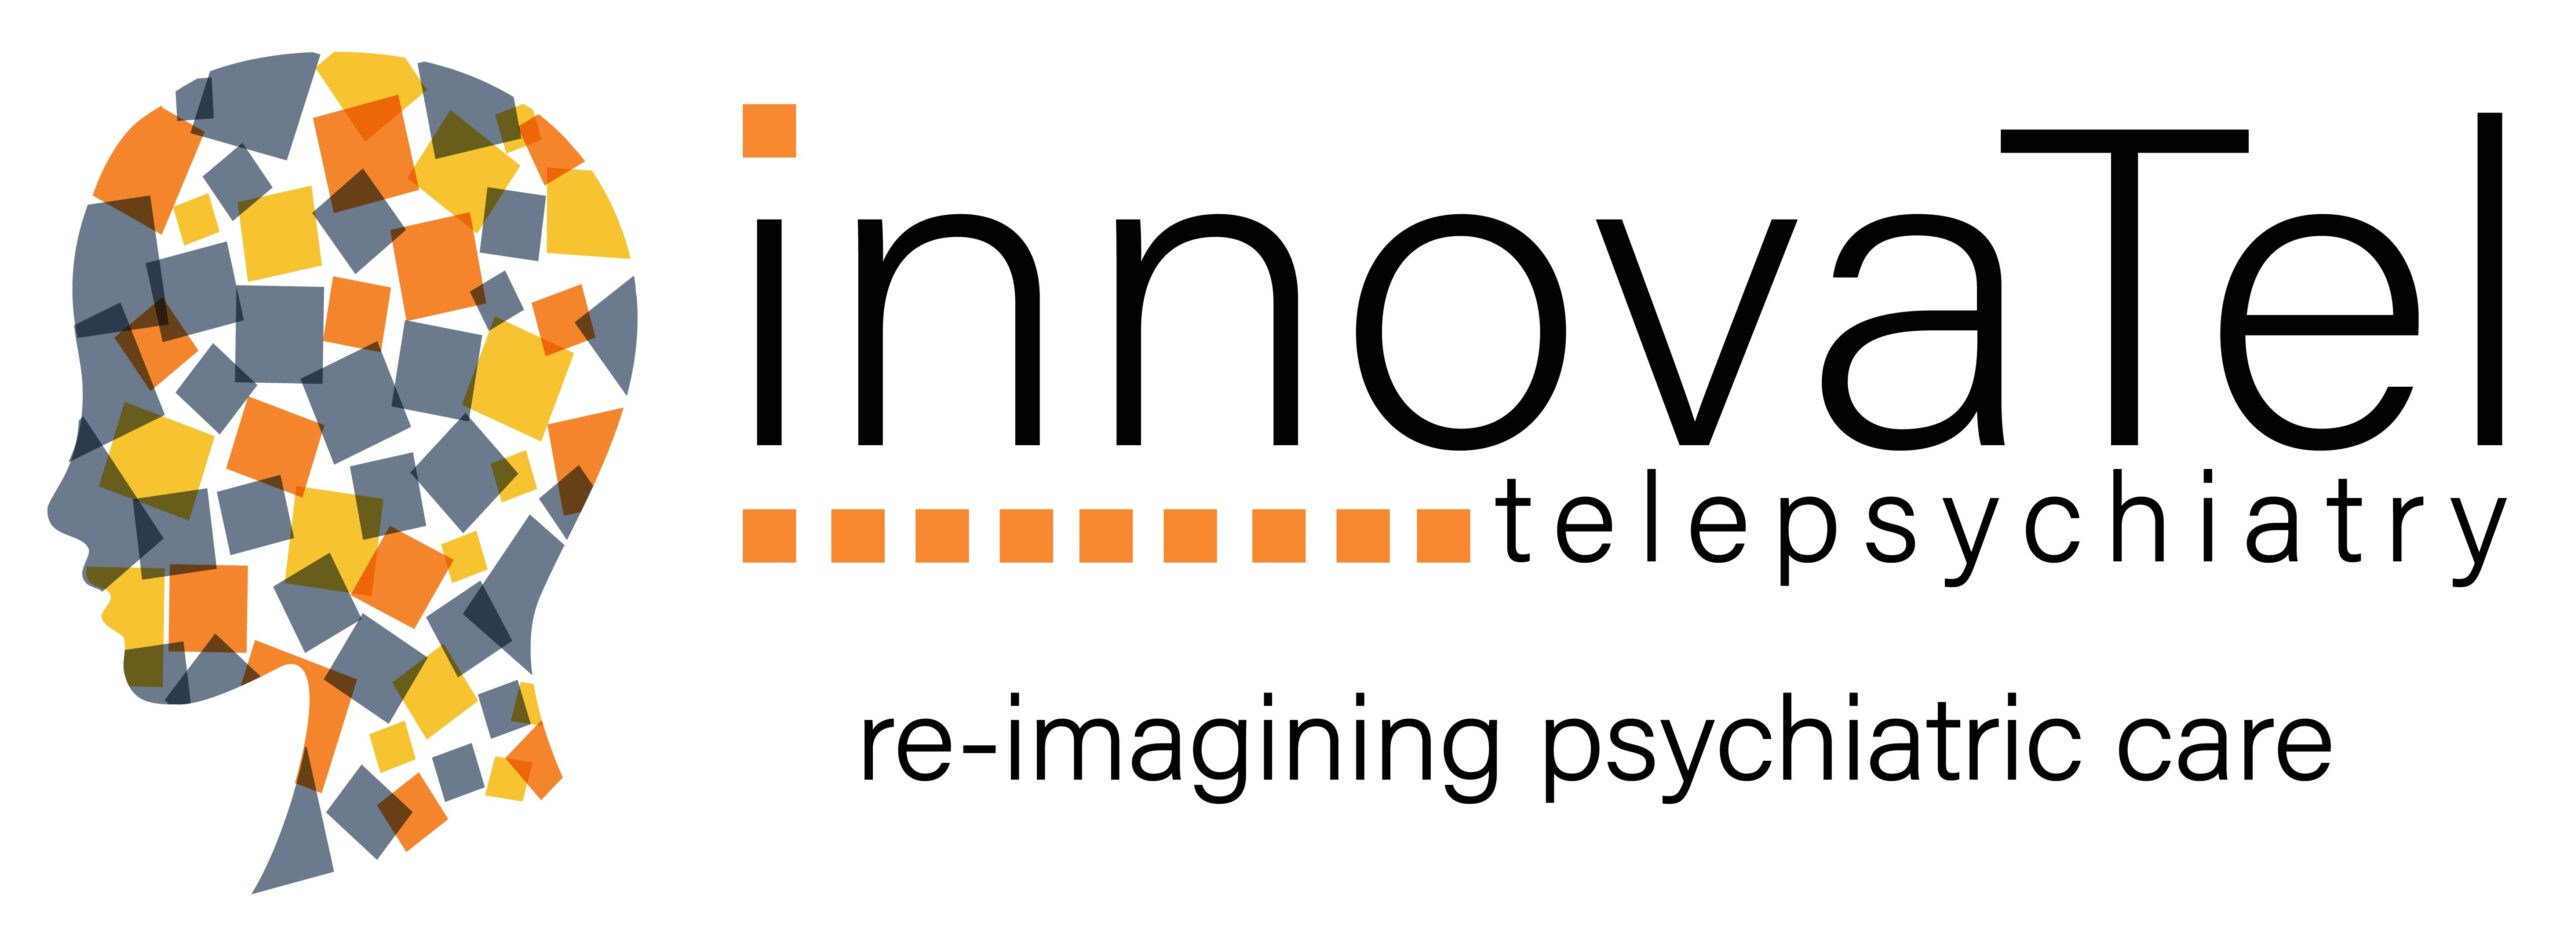 innovatel telepsychiatry re-imagining psychiatric care